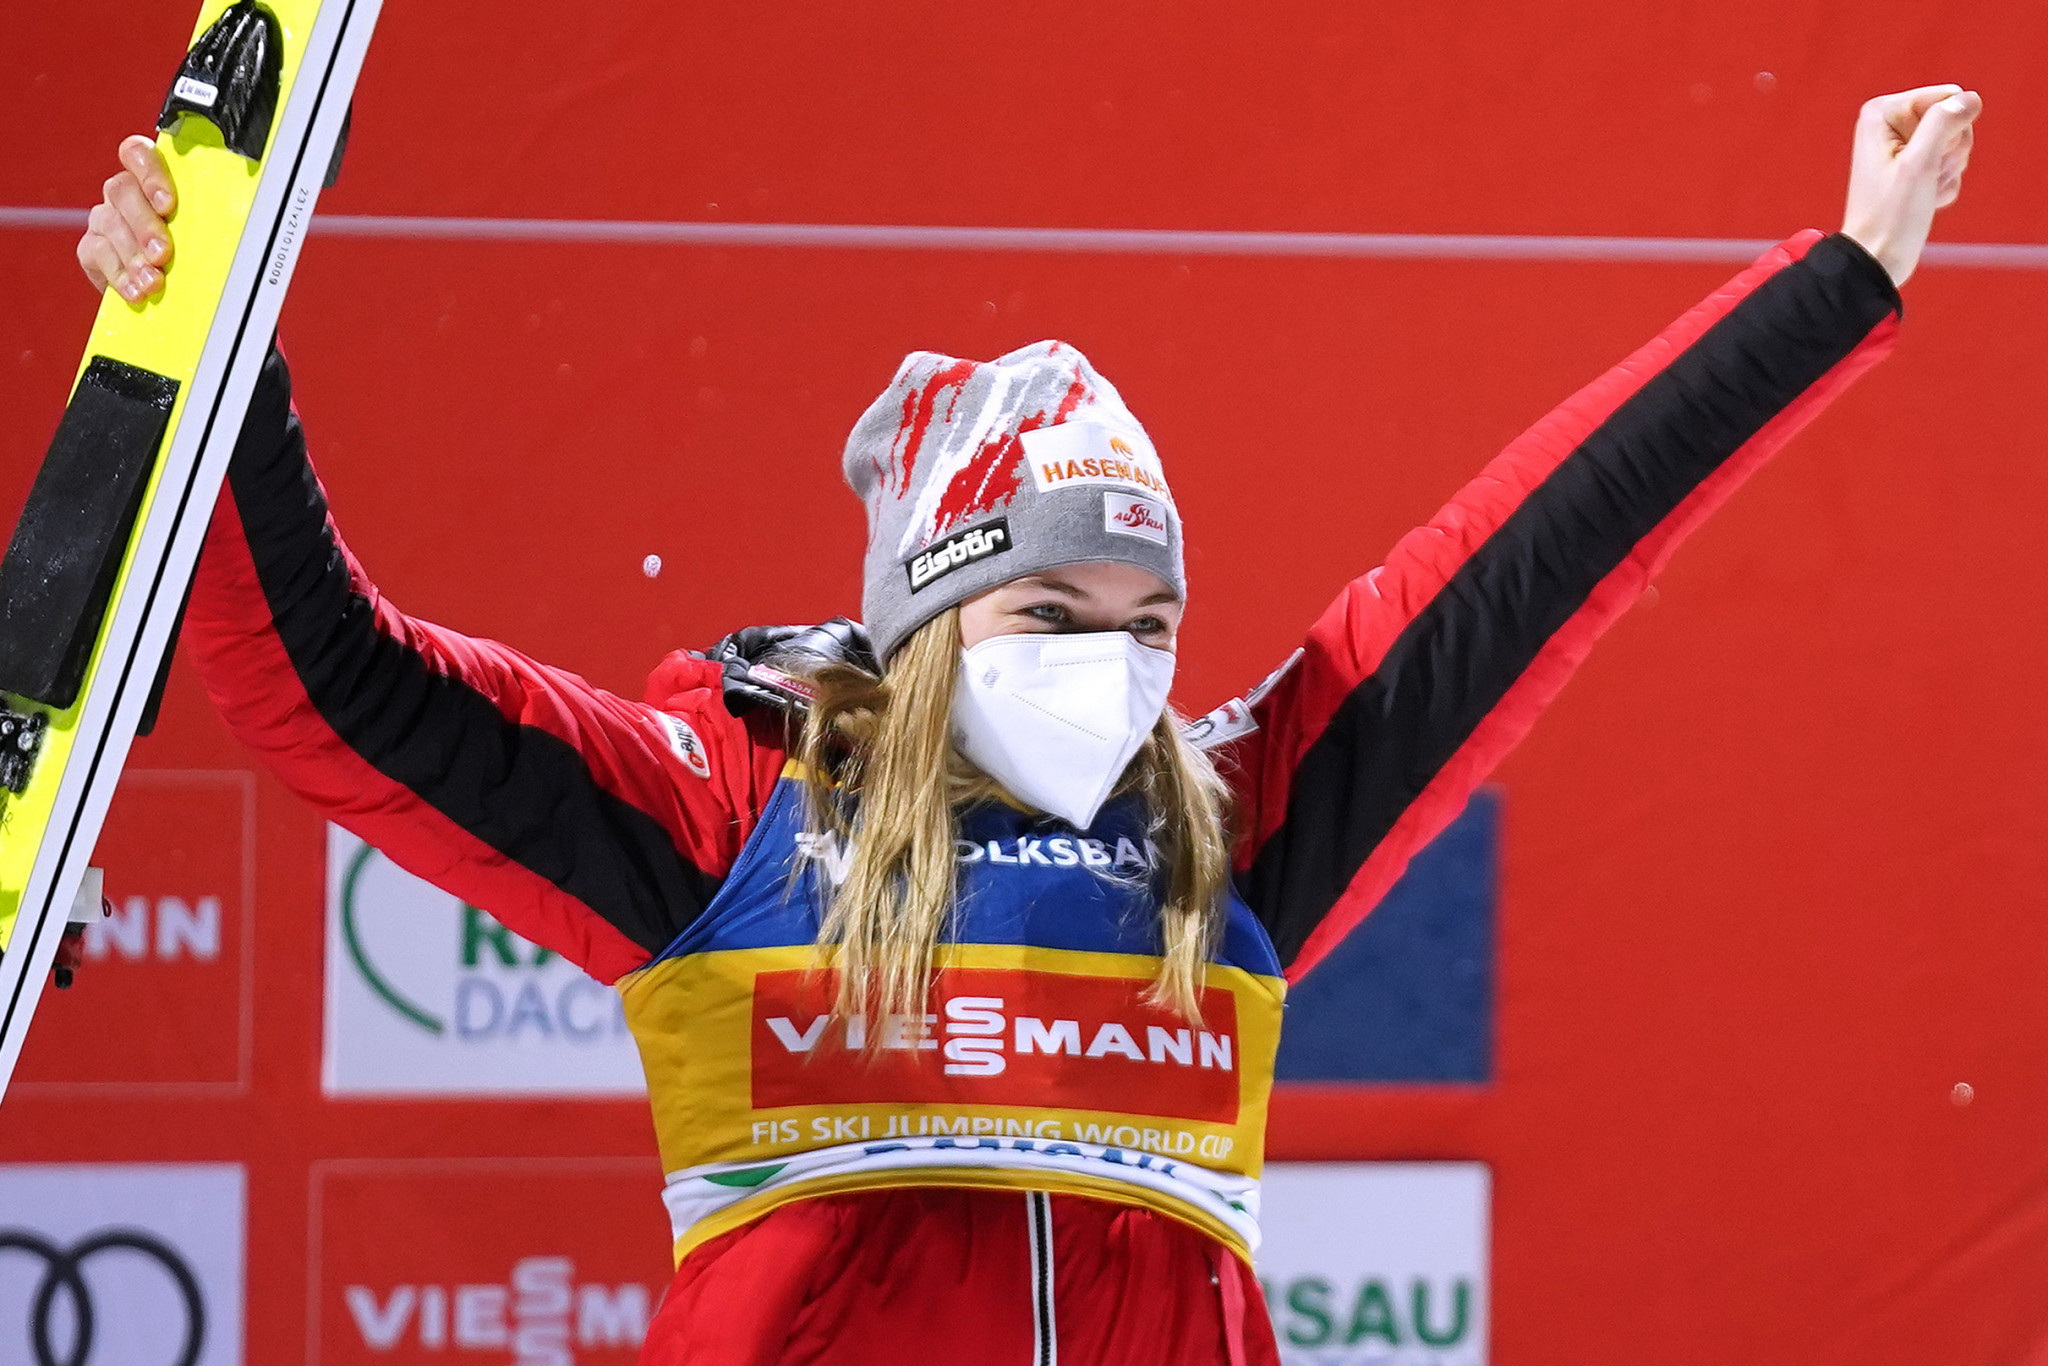 Marita Kramer won the FIS Women's Ski Jumping World Cup event in Ramsau ©Getty Images